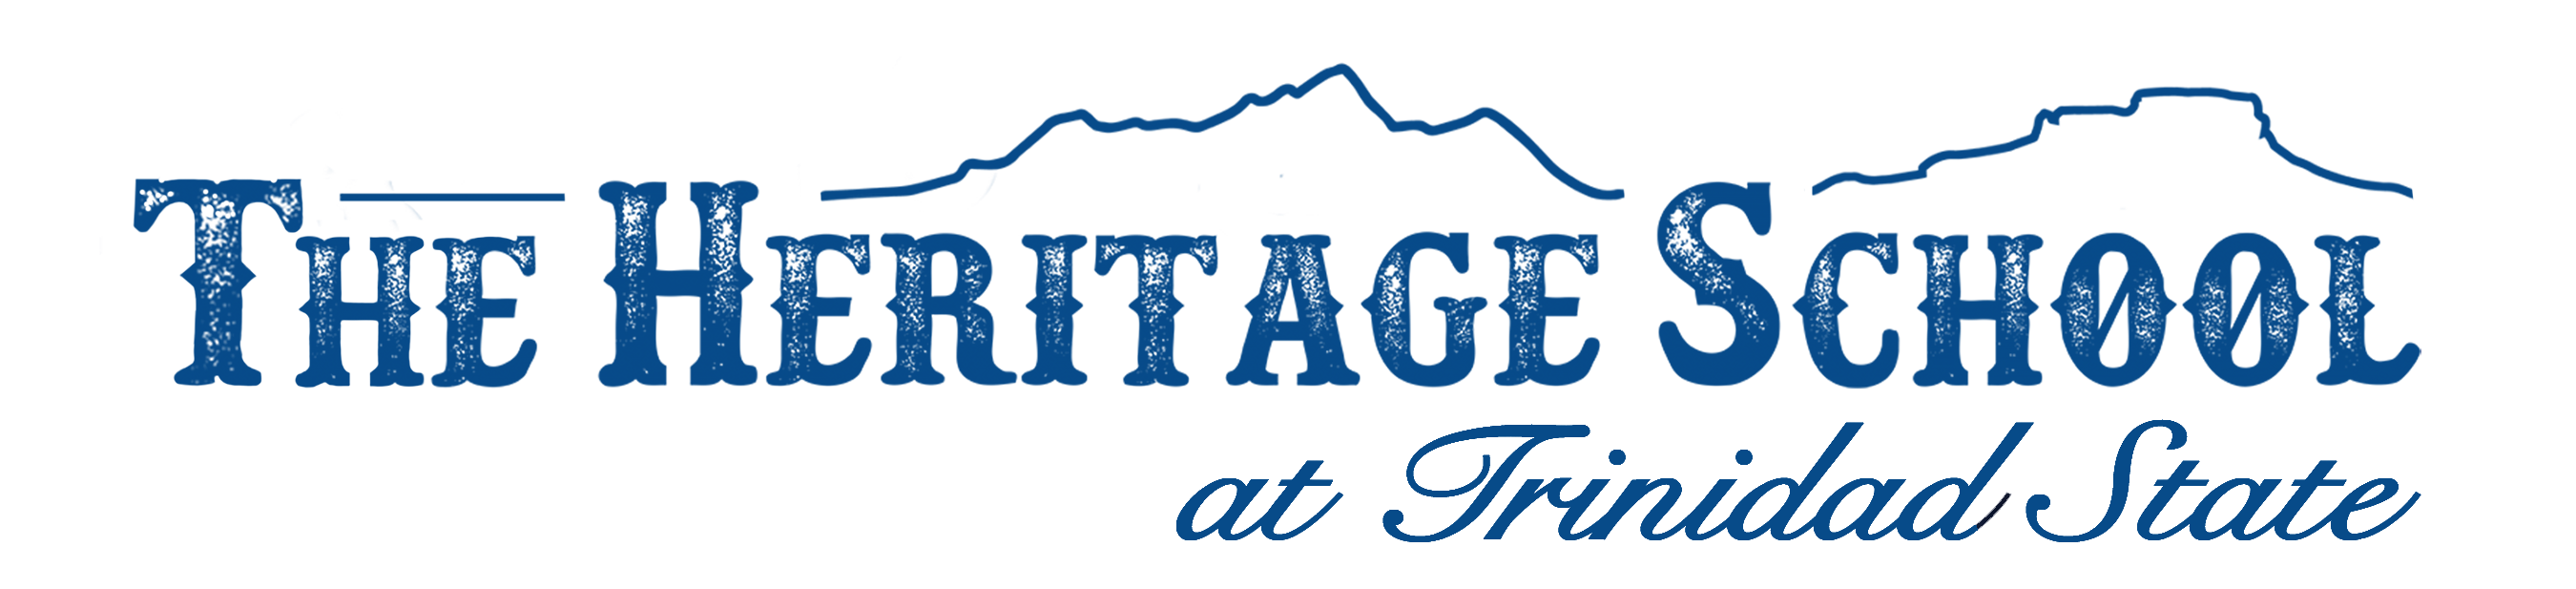 Heritage School logo image